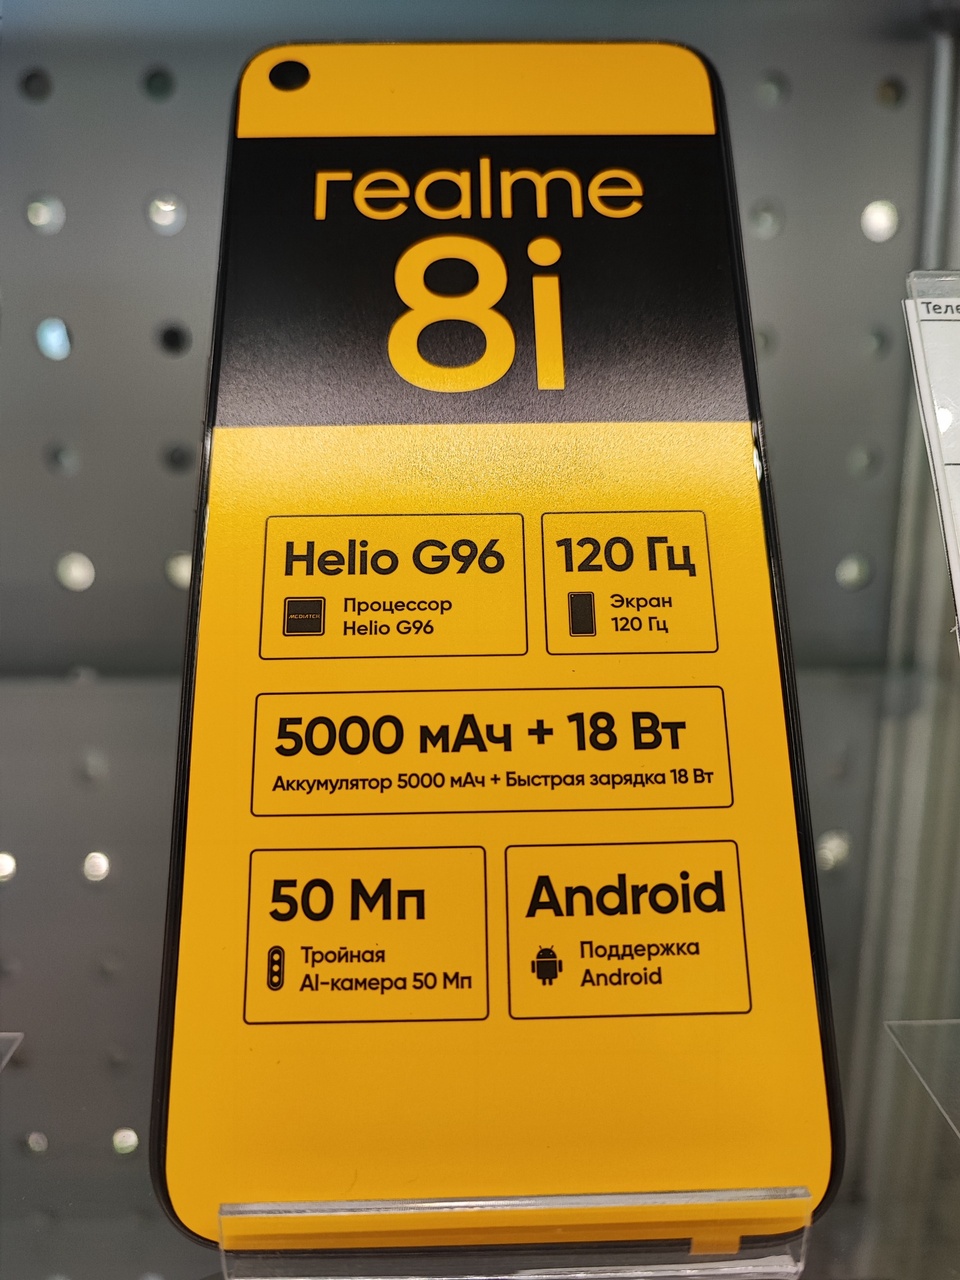 Realme 8i - 16 990 ₽, заказать онлайн.